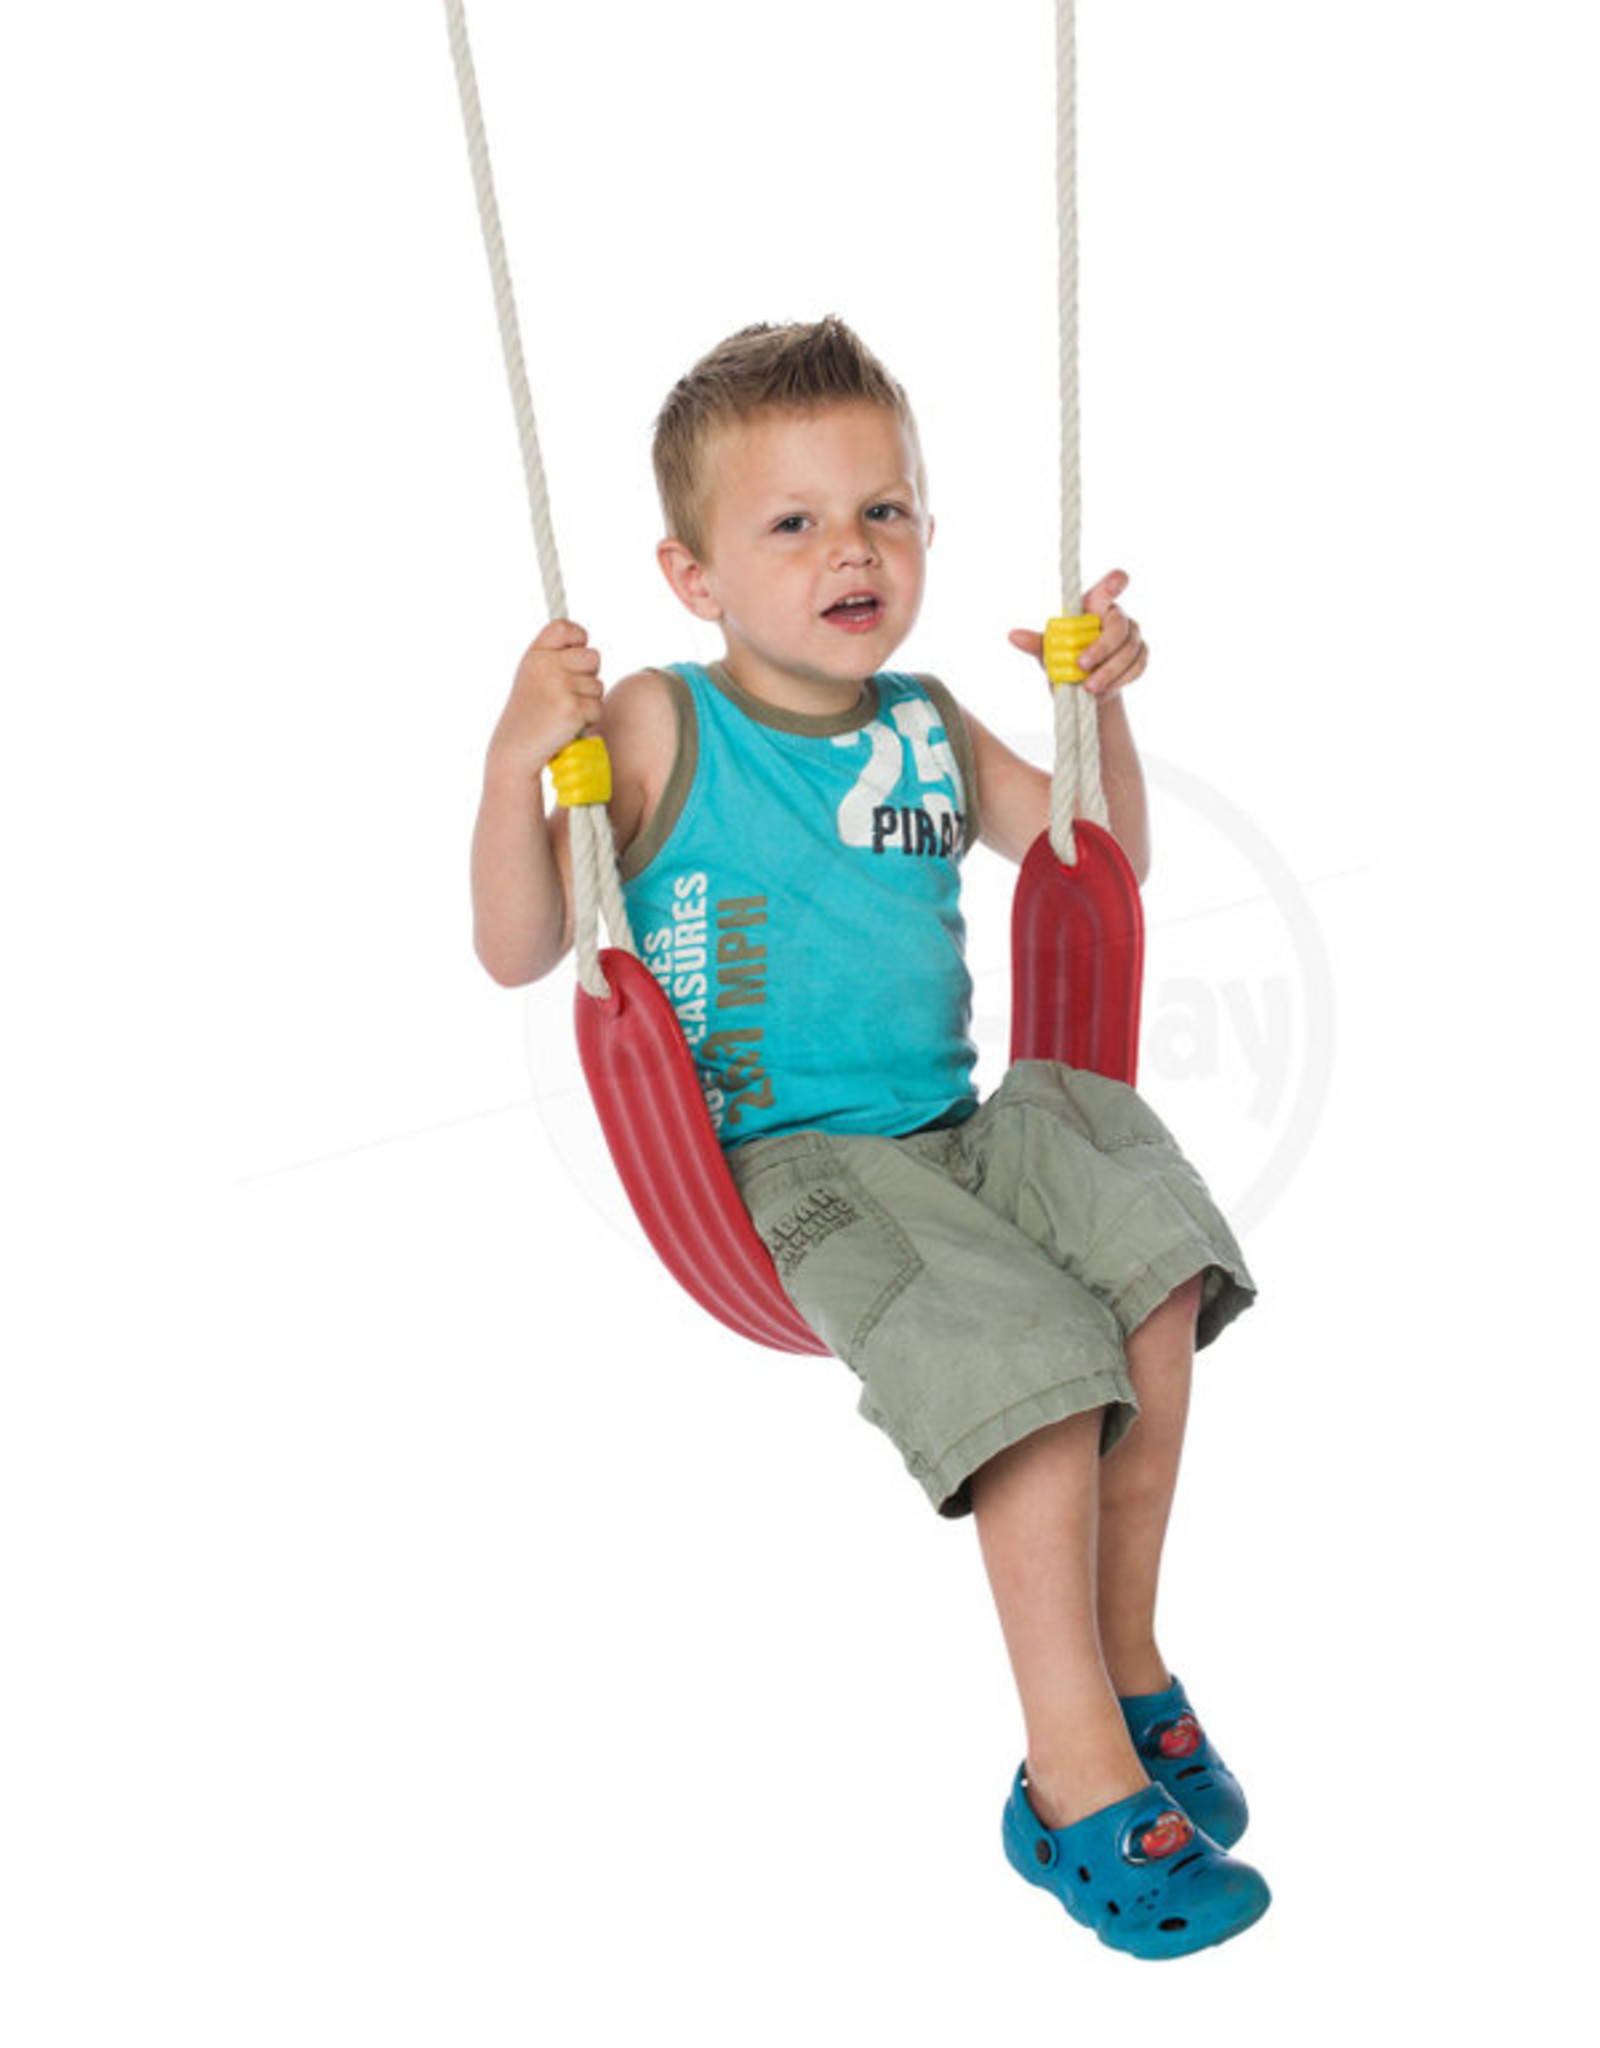 Déko-Play Déko-Play swing seat flexible plastic yellow